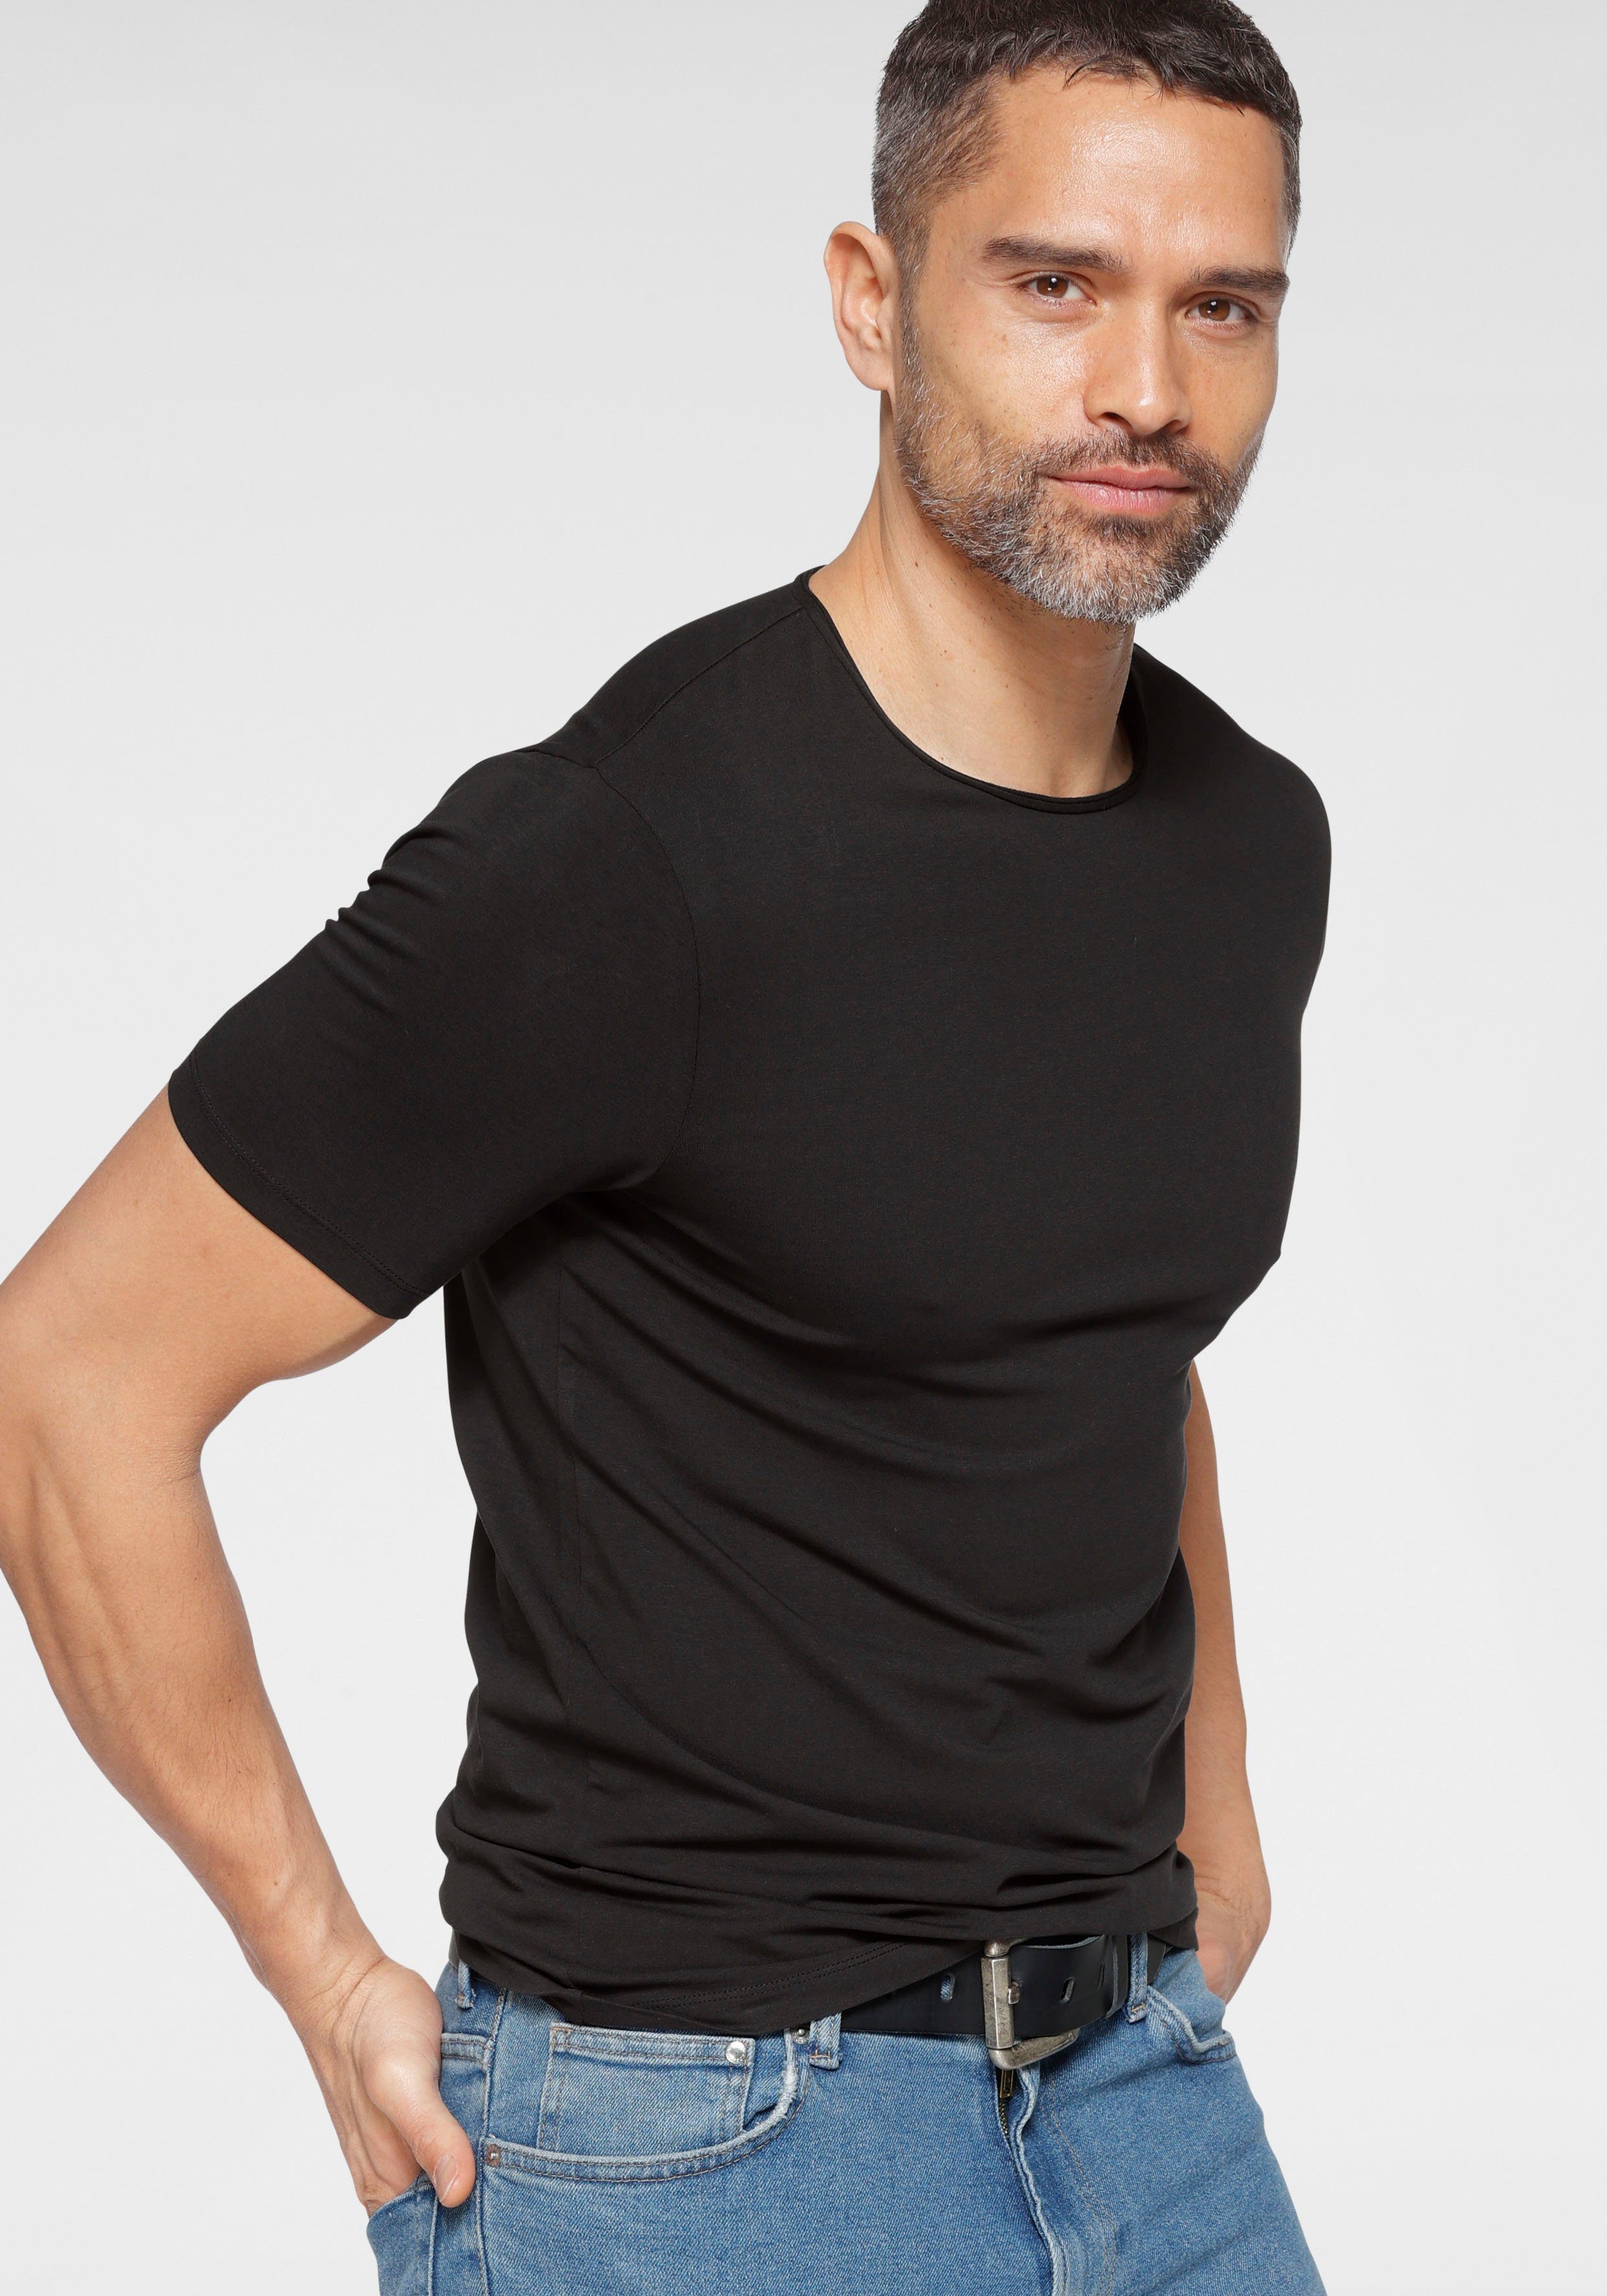 OLYMP Level schwarz aus Five Jersey T-Shirt body feinem fit